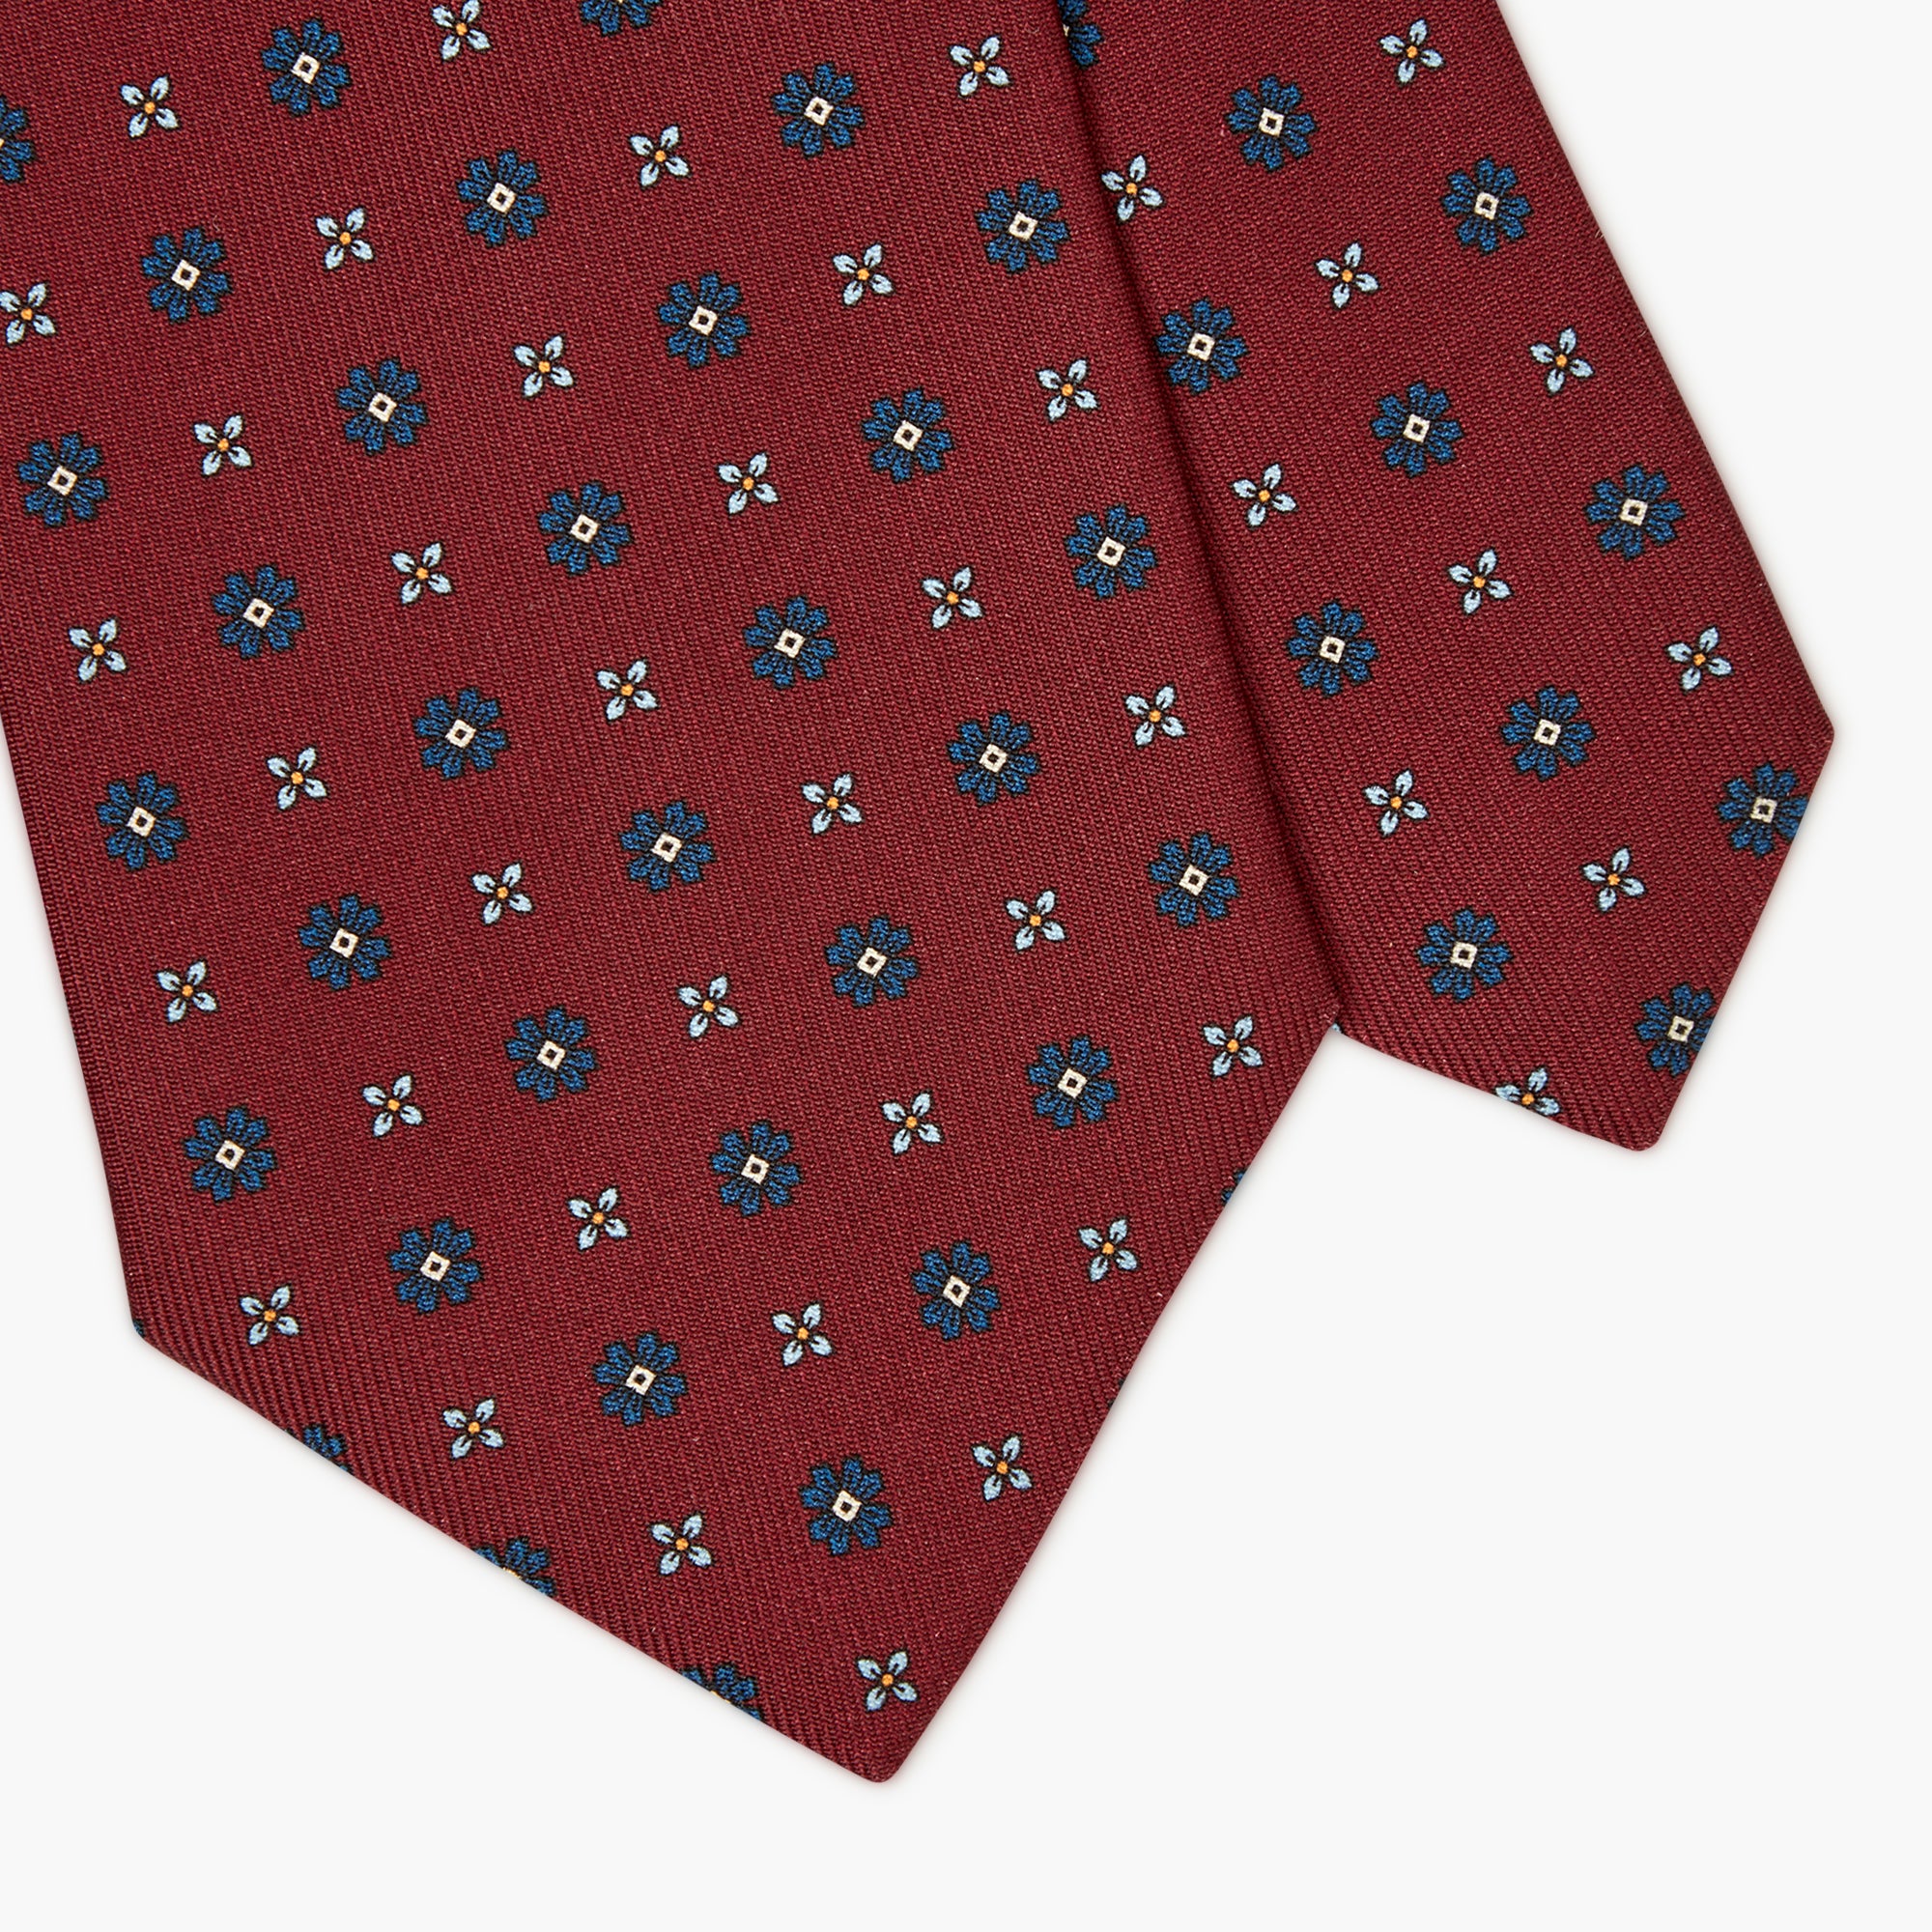 3-Fold Floral Printed English Silk Tie - Burgundy Red